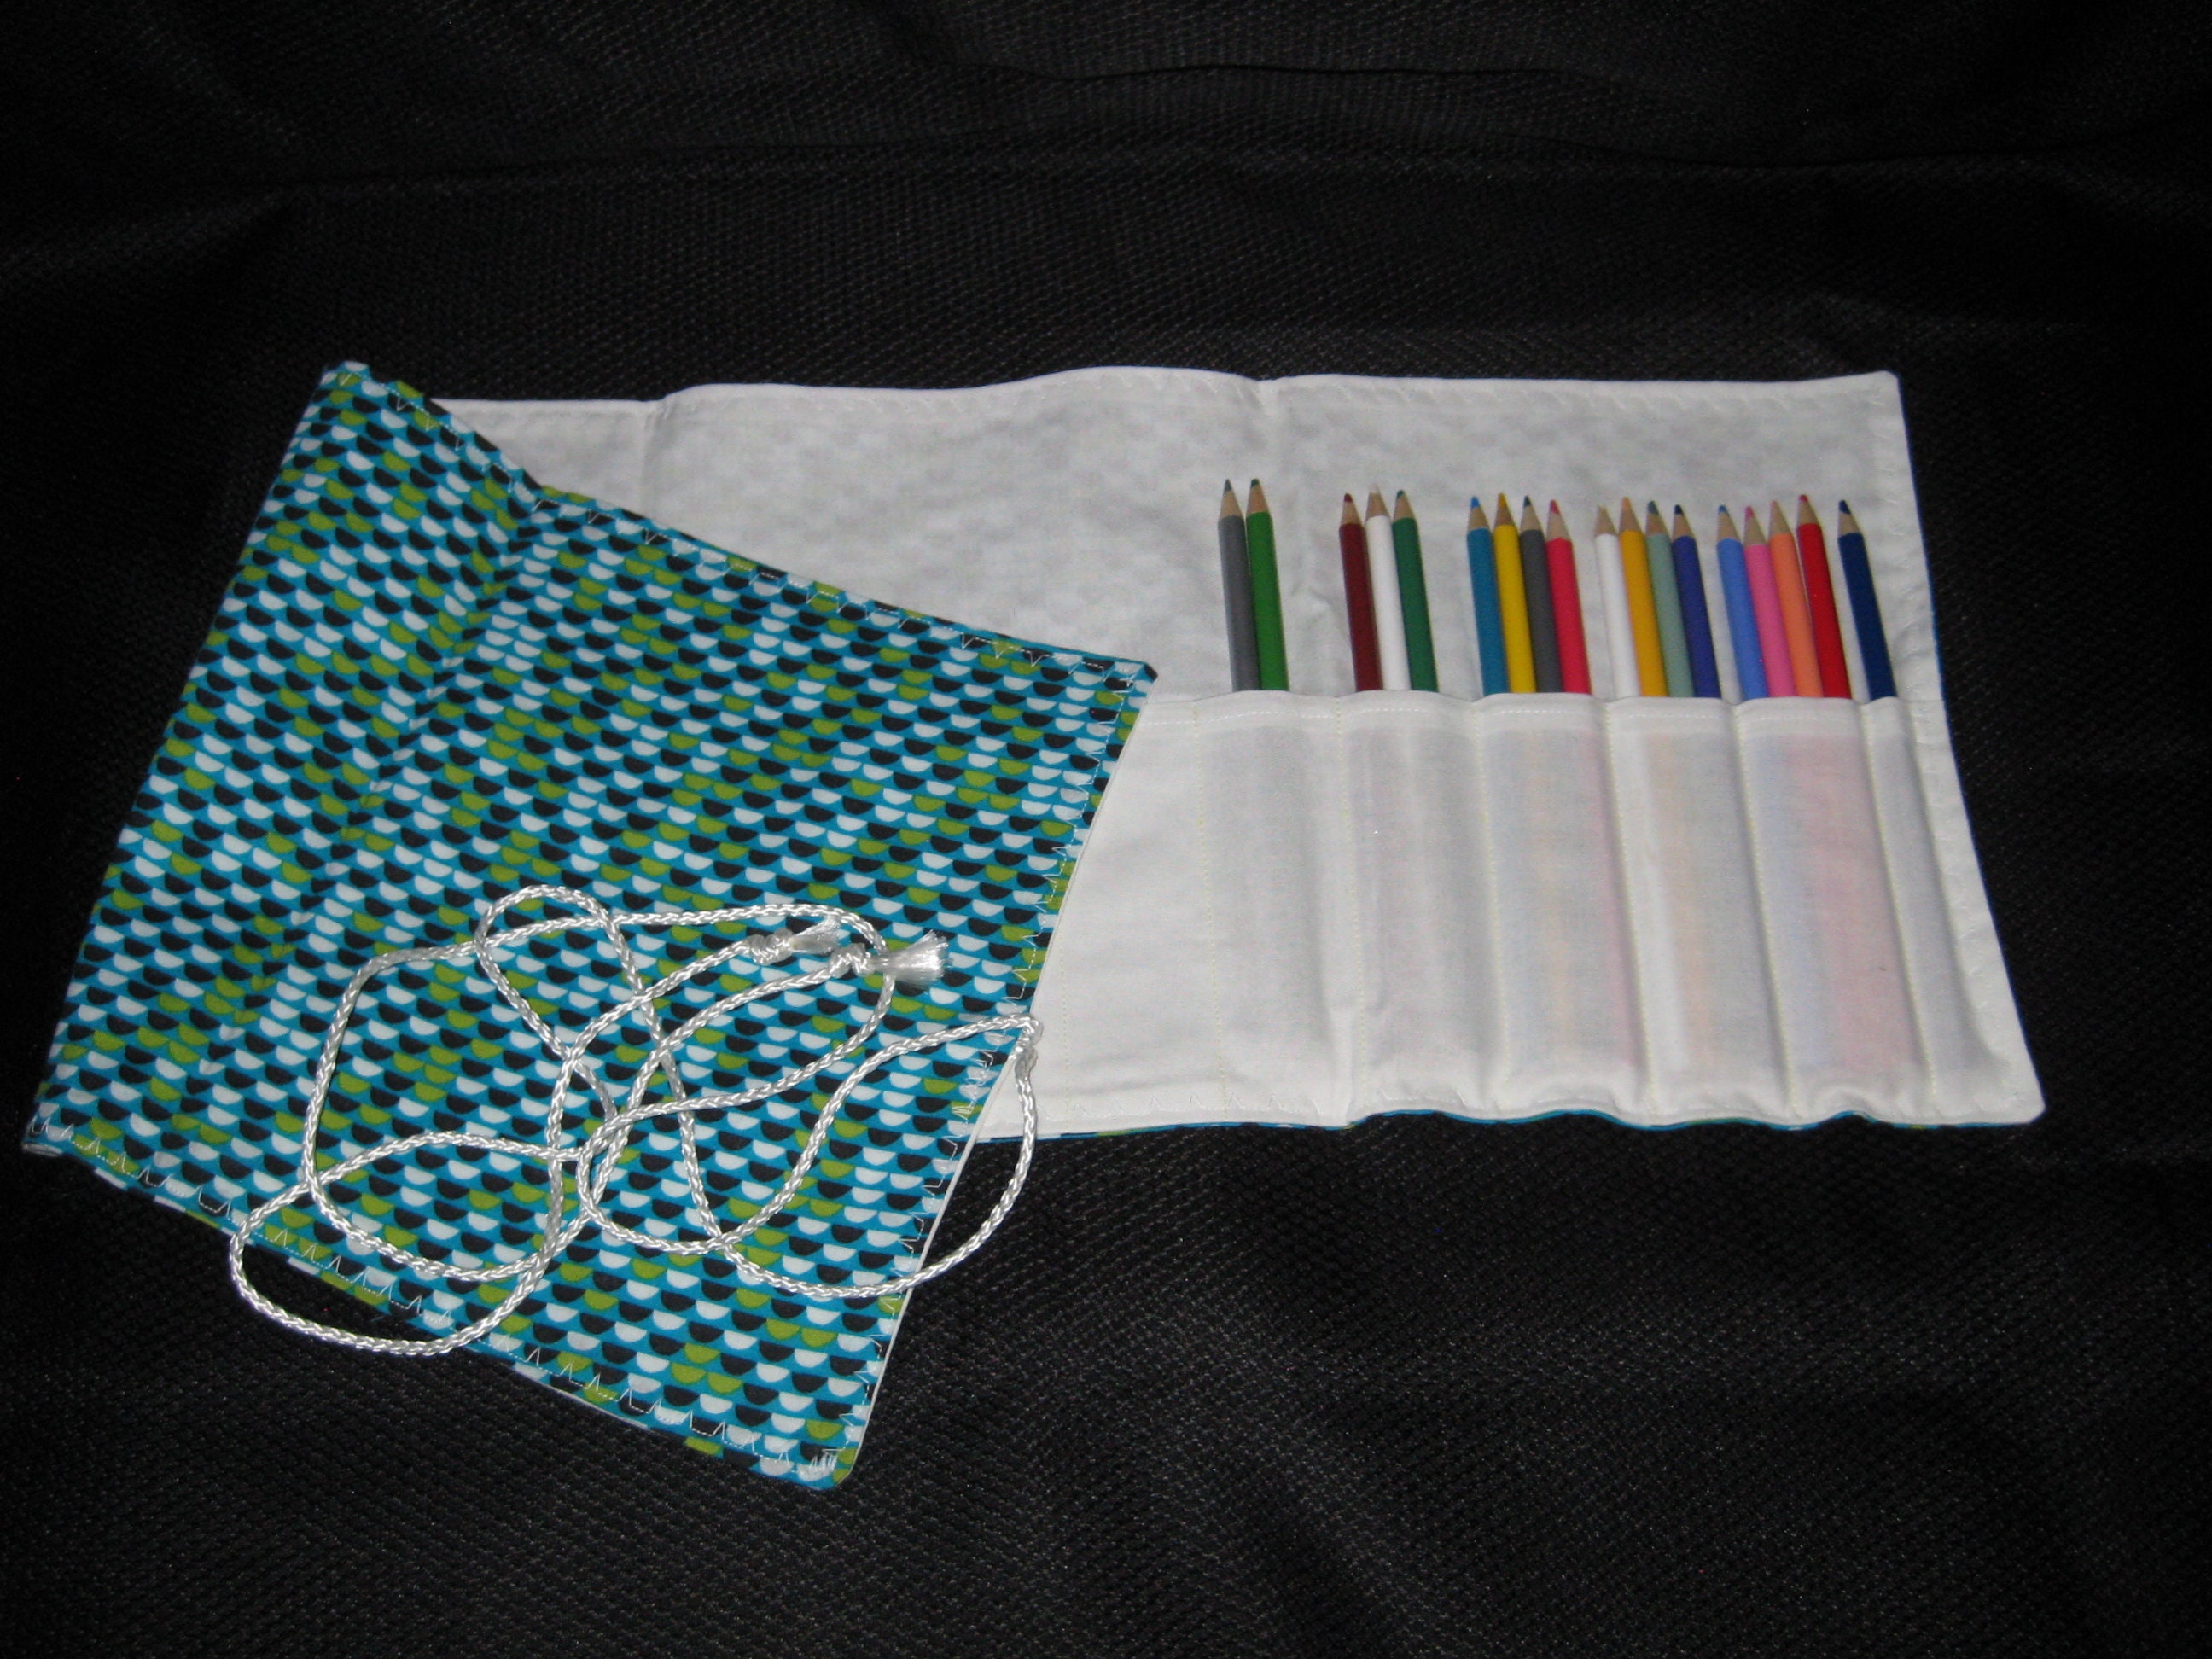 Wrapables Pencil Roll Organizer, Colored Pencil Wrap Pouch (72 Slots) Bohemian